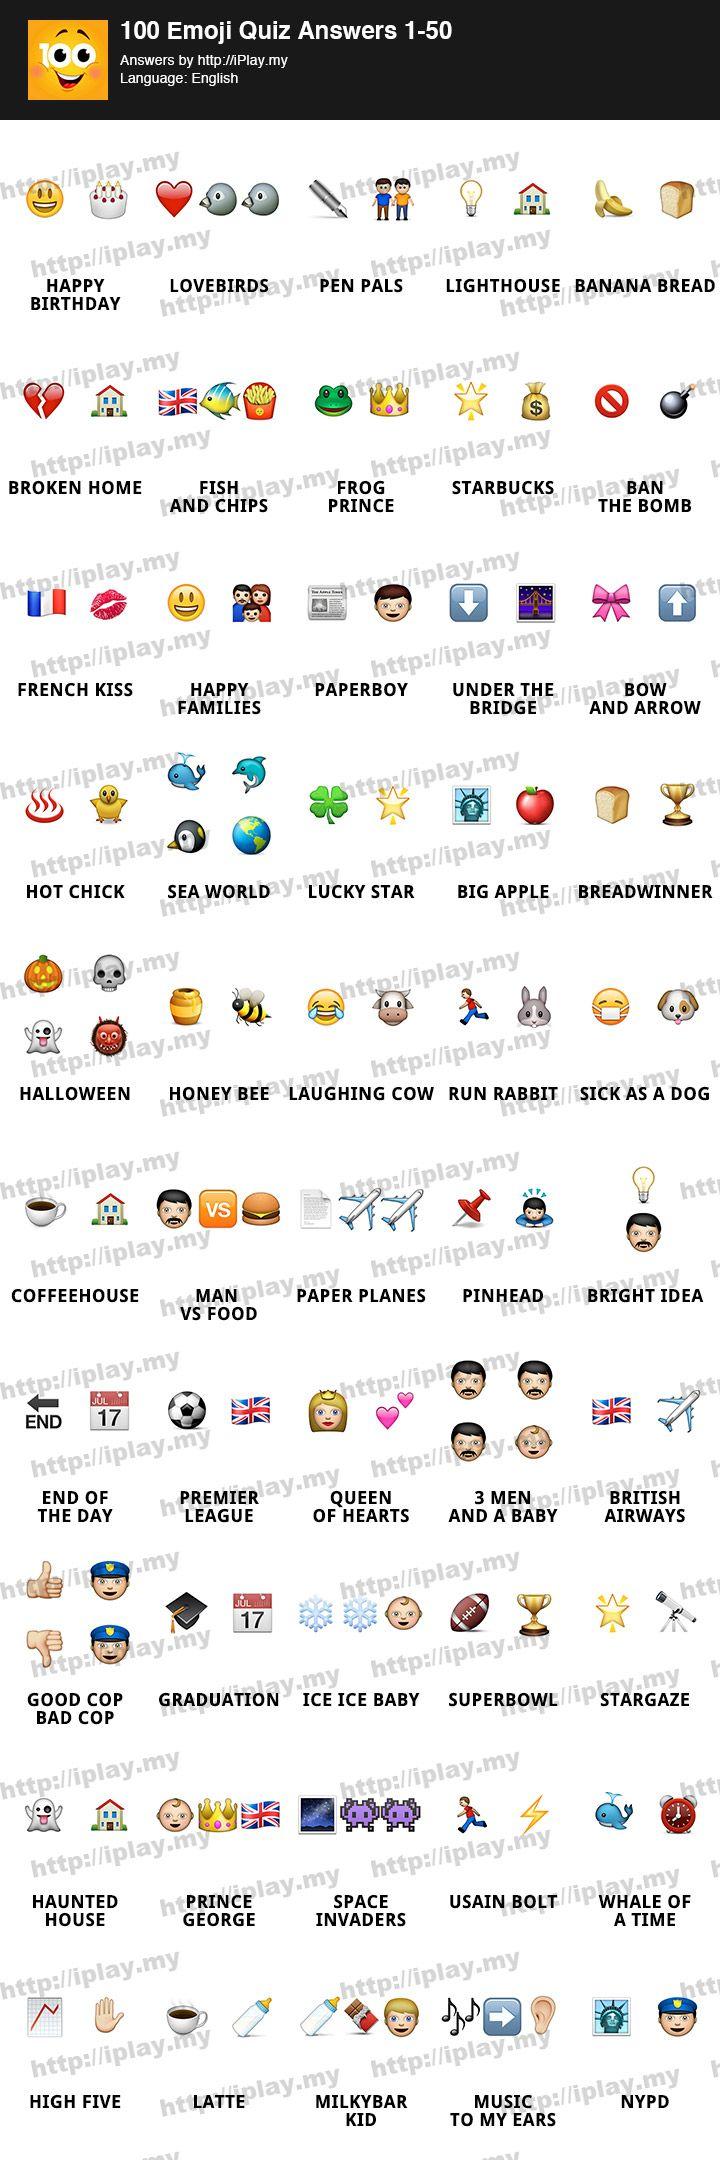 100 Emoji Logo - 100 Emoji Quiz Answers with reveal pics | iPlay.my